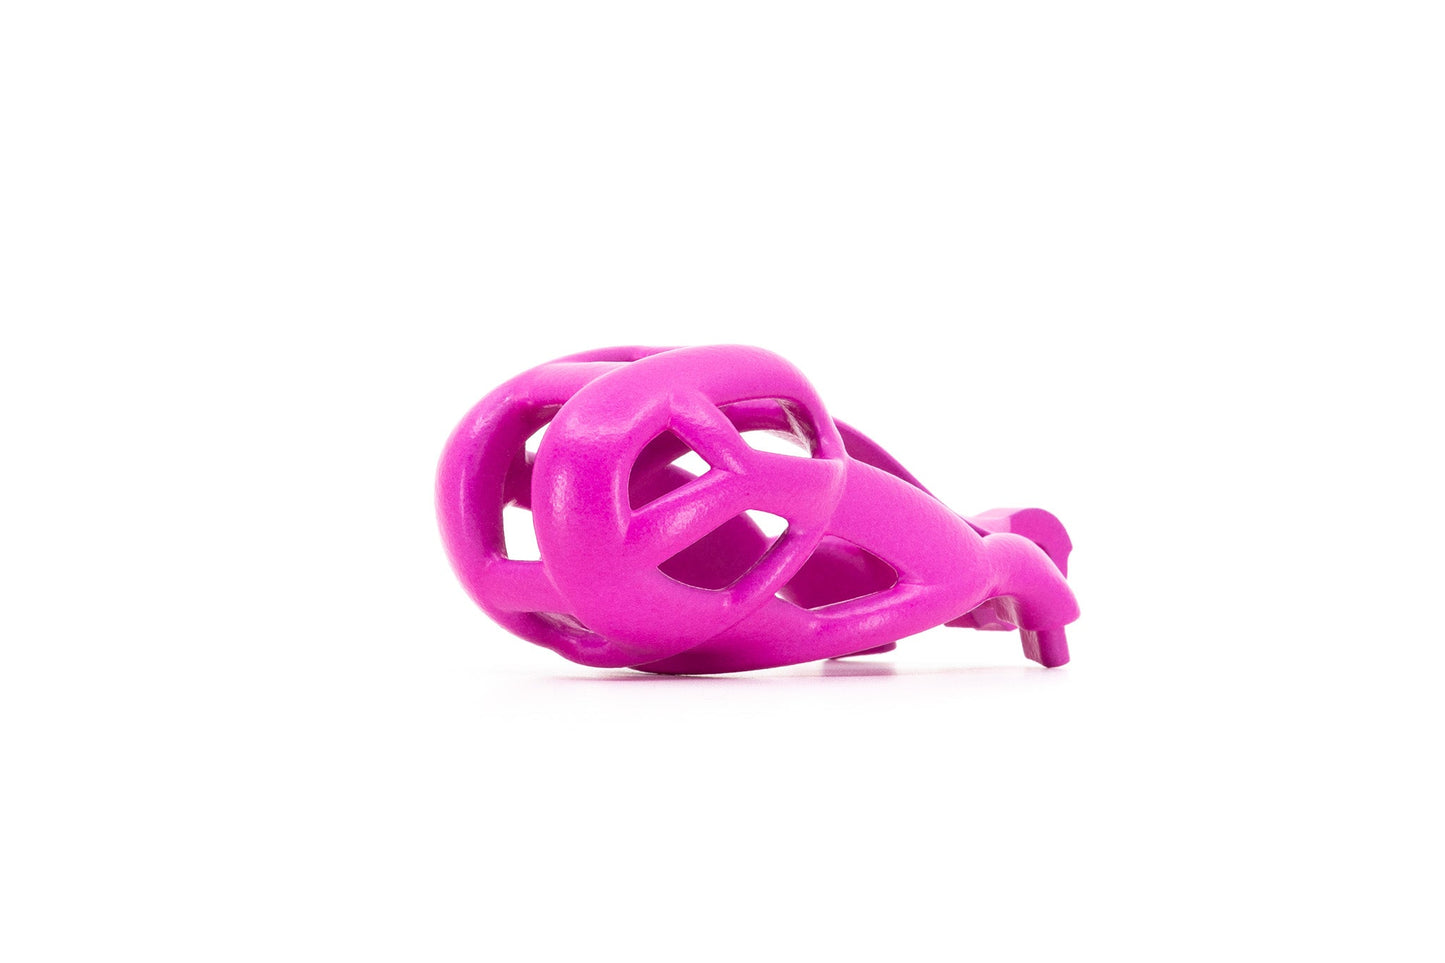 Cobra S Chastity Kit (Fusion Pink)